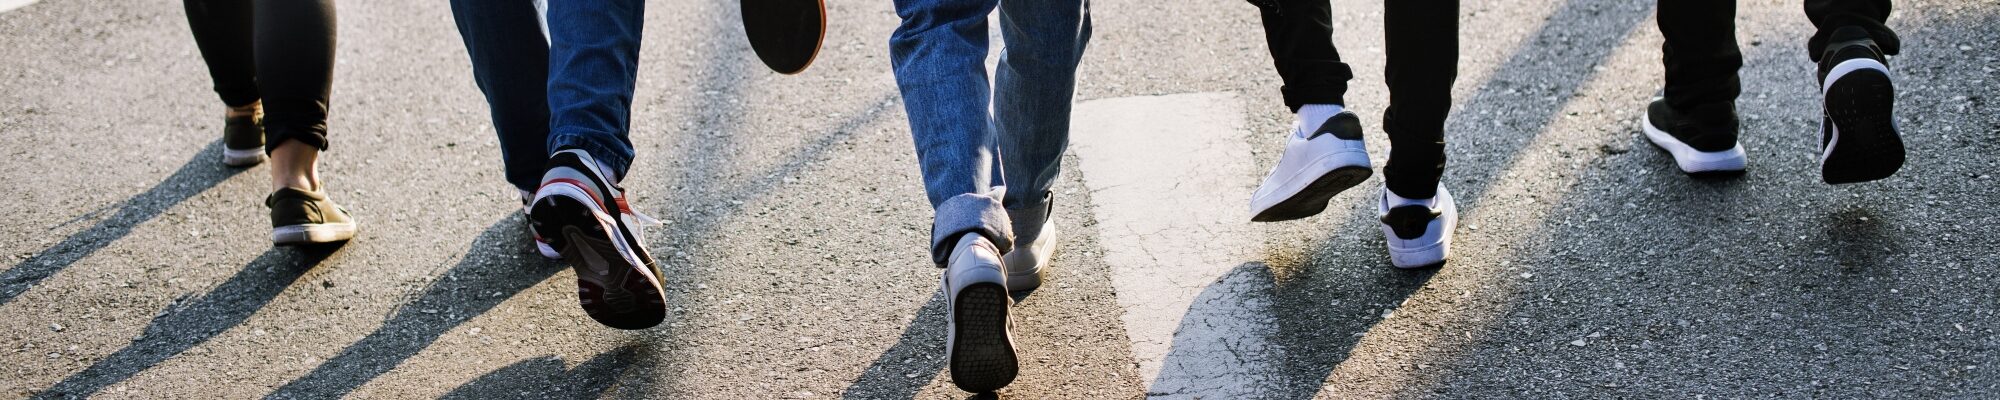 Image of people's feet walking on pavement